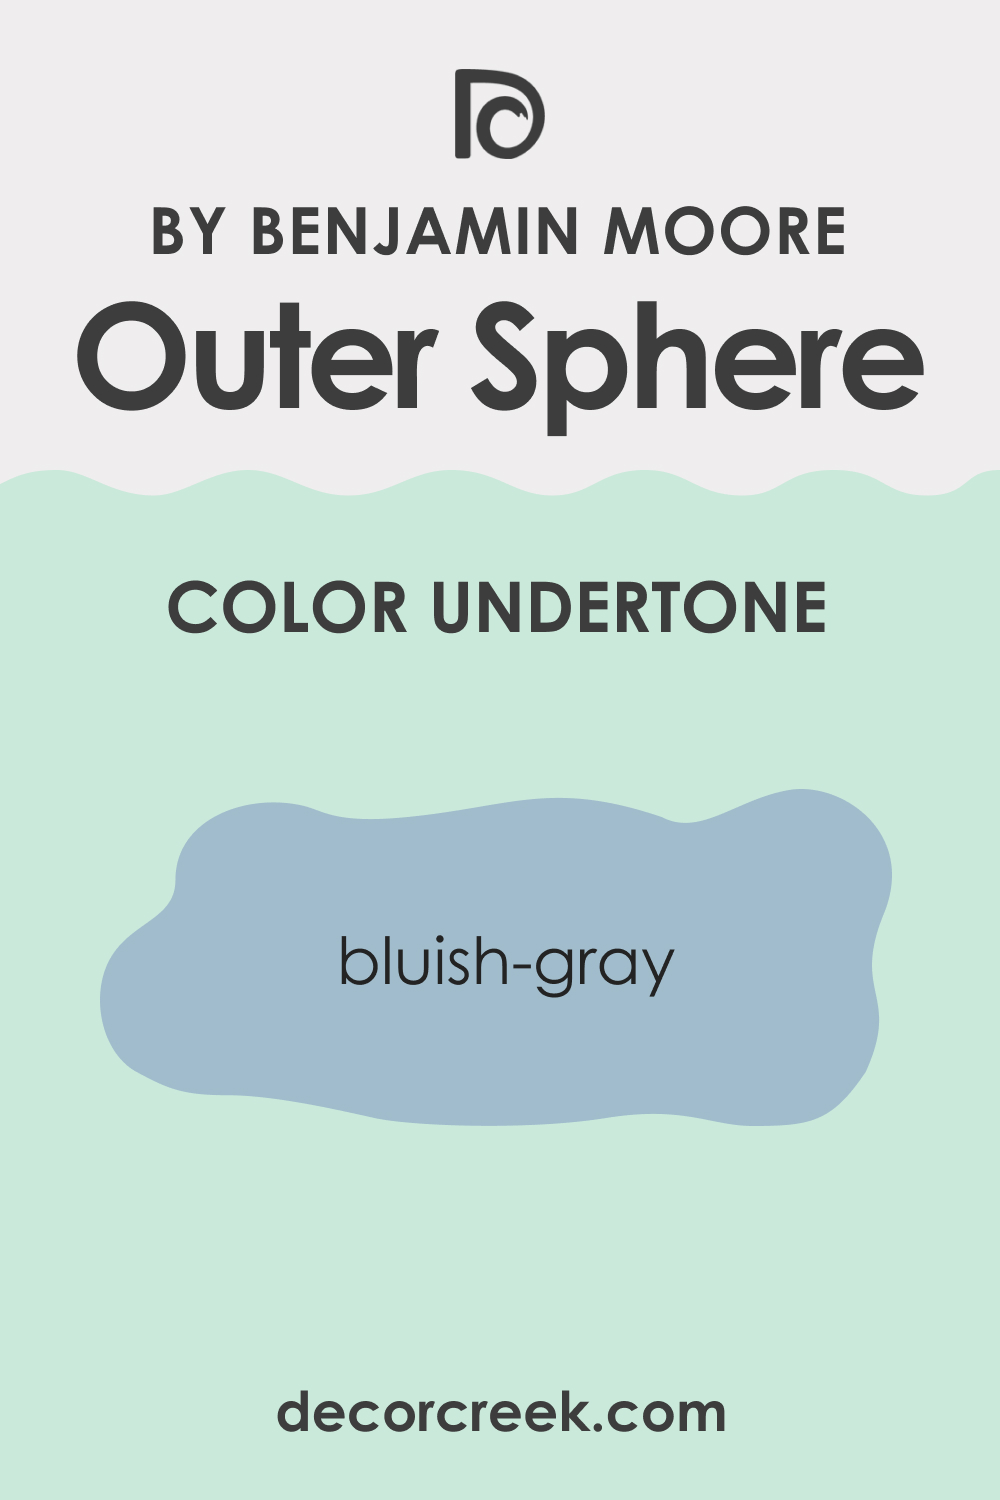 Undertones of Outer Sphere 645